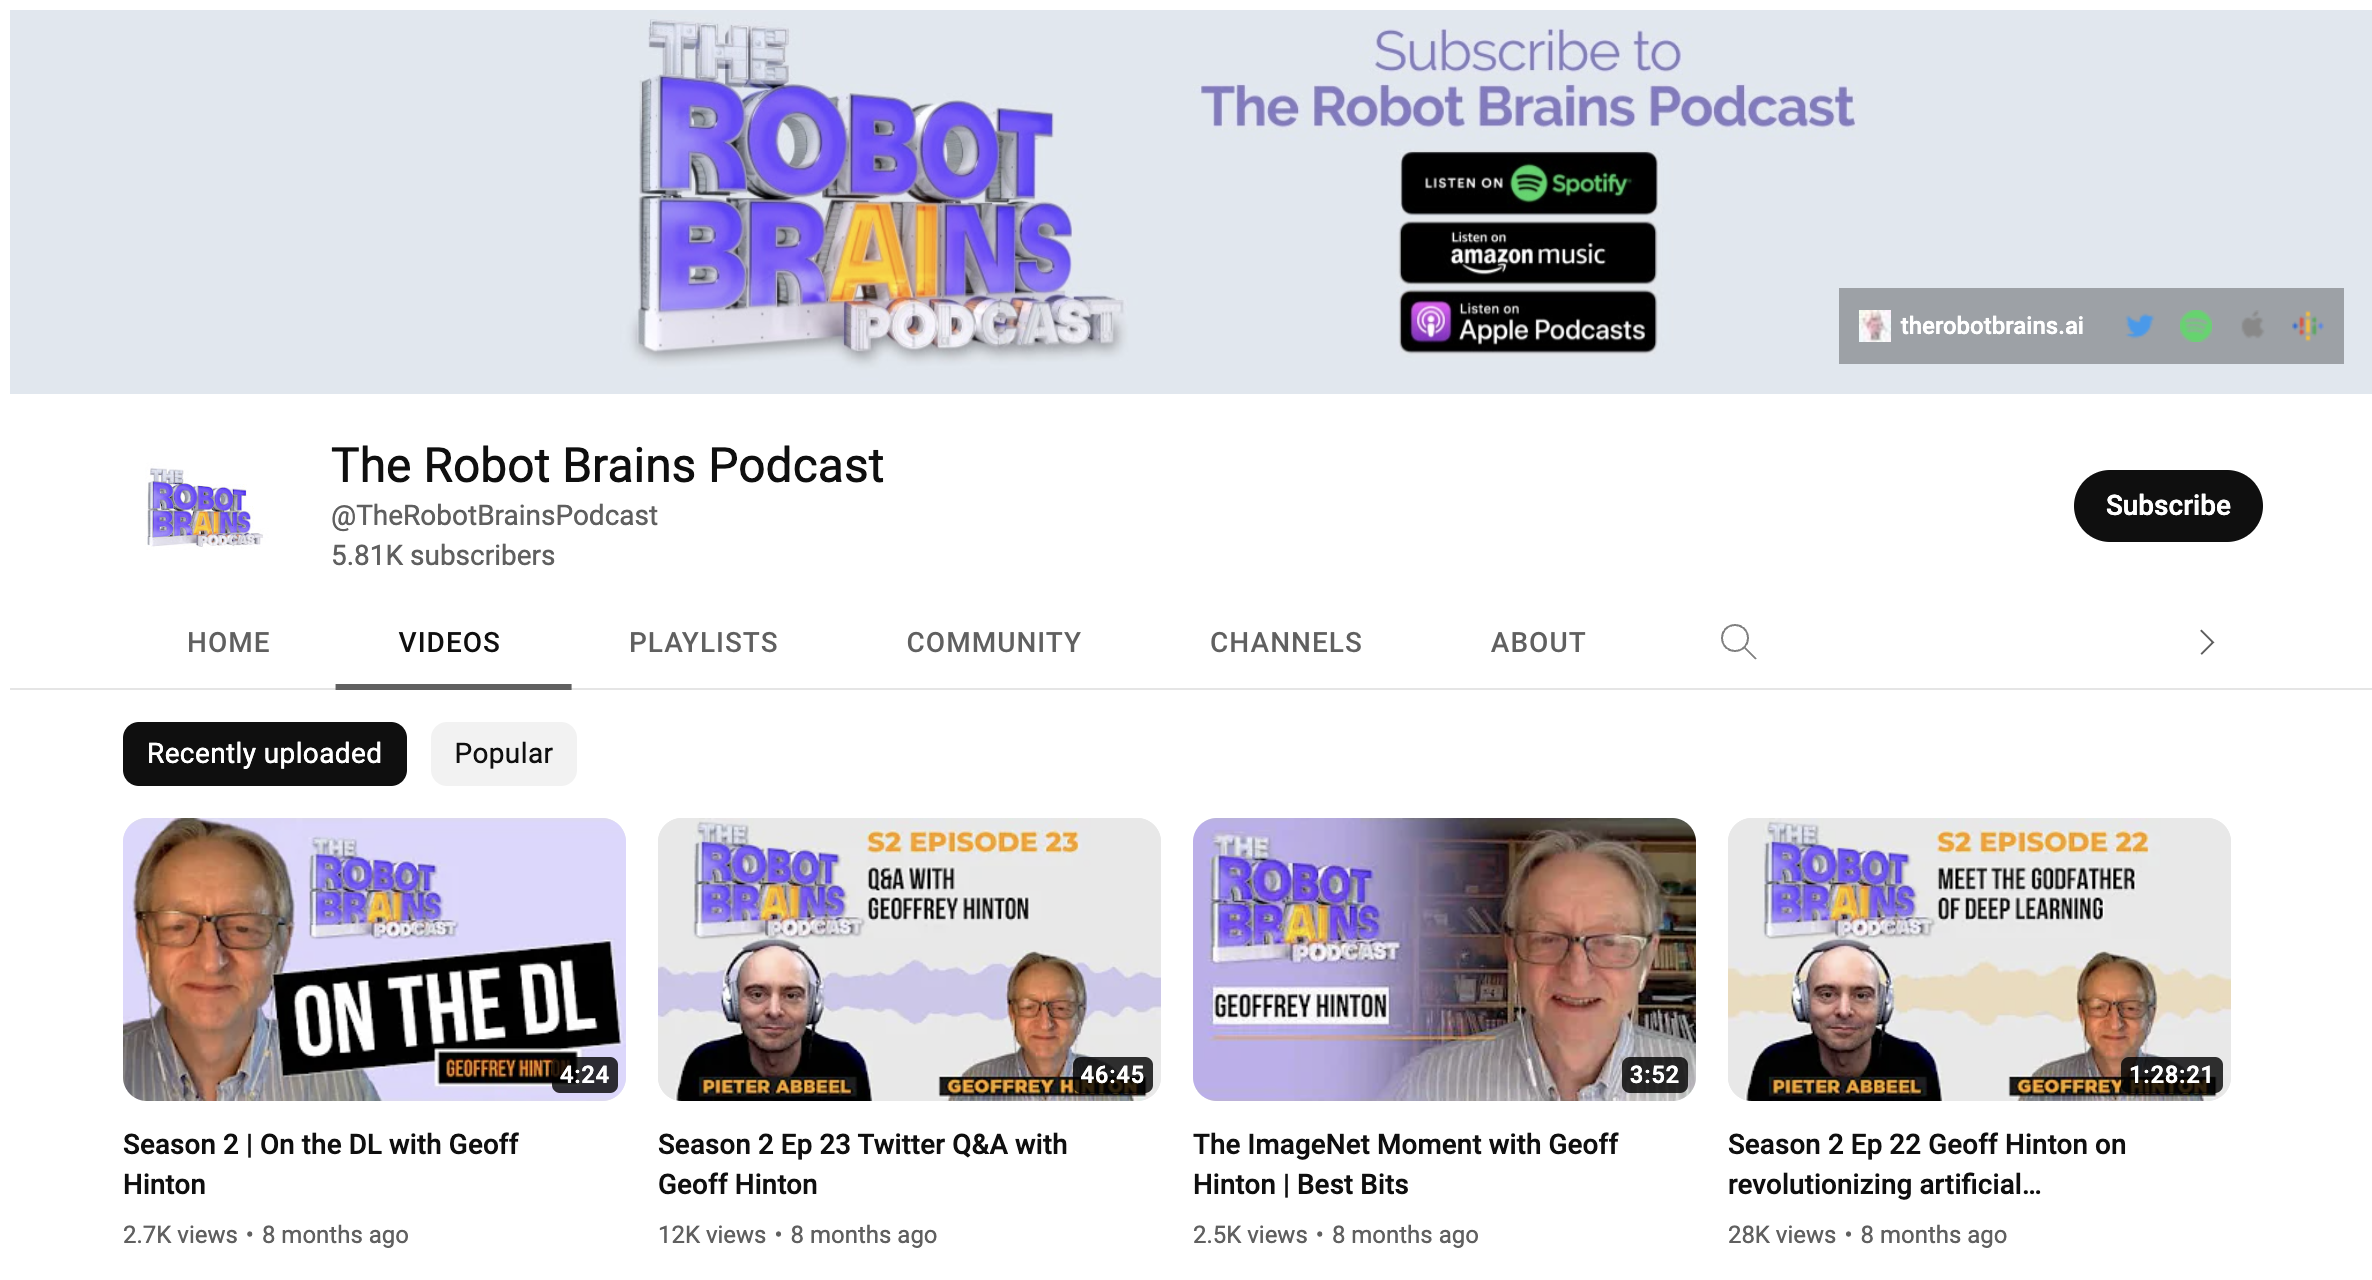 The Robot Brains